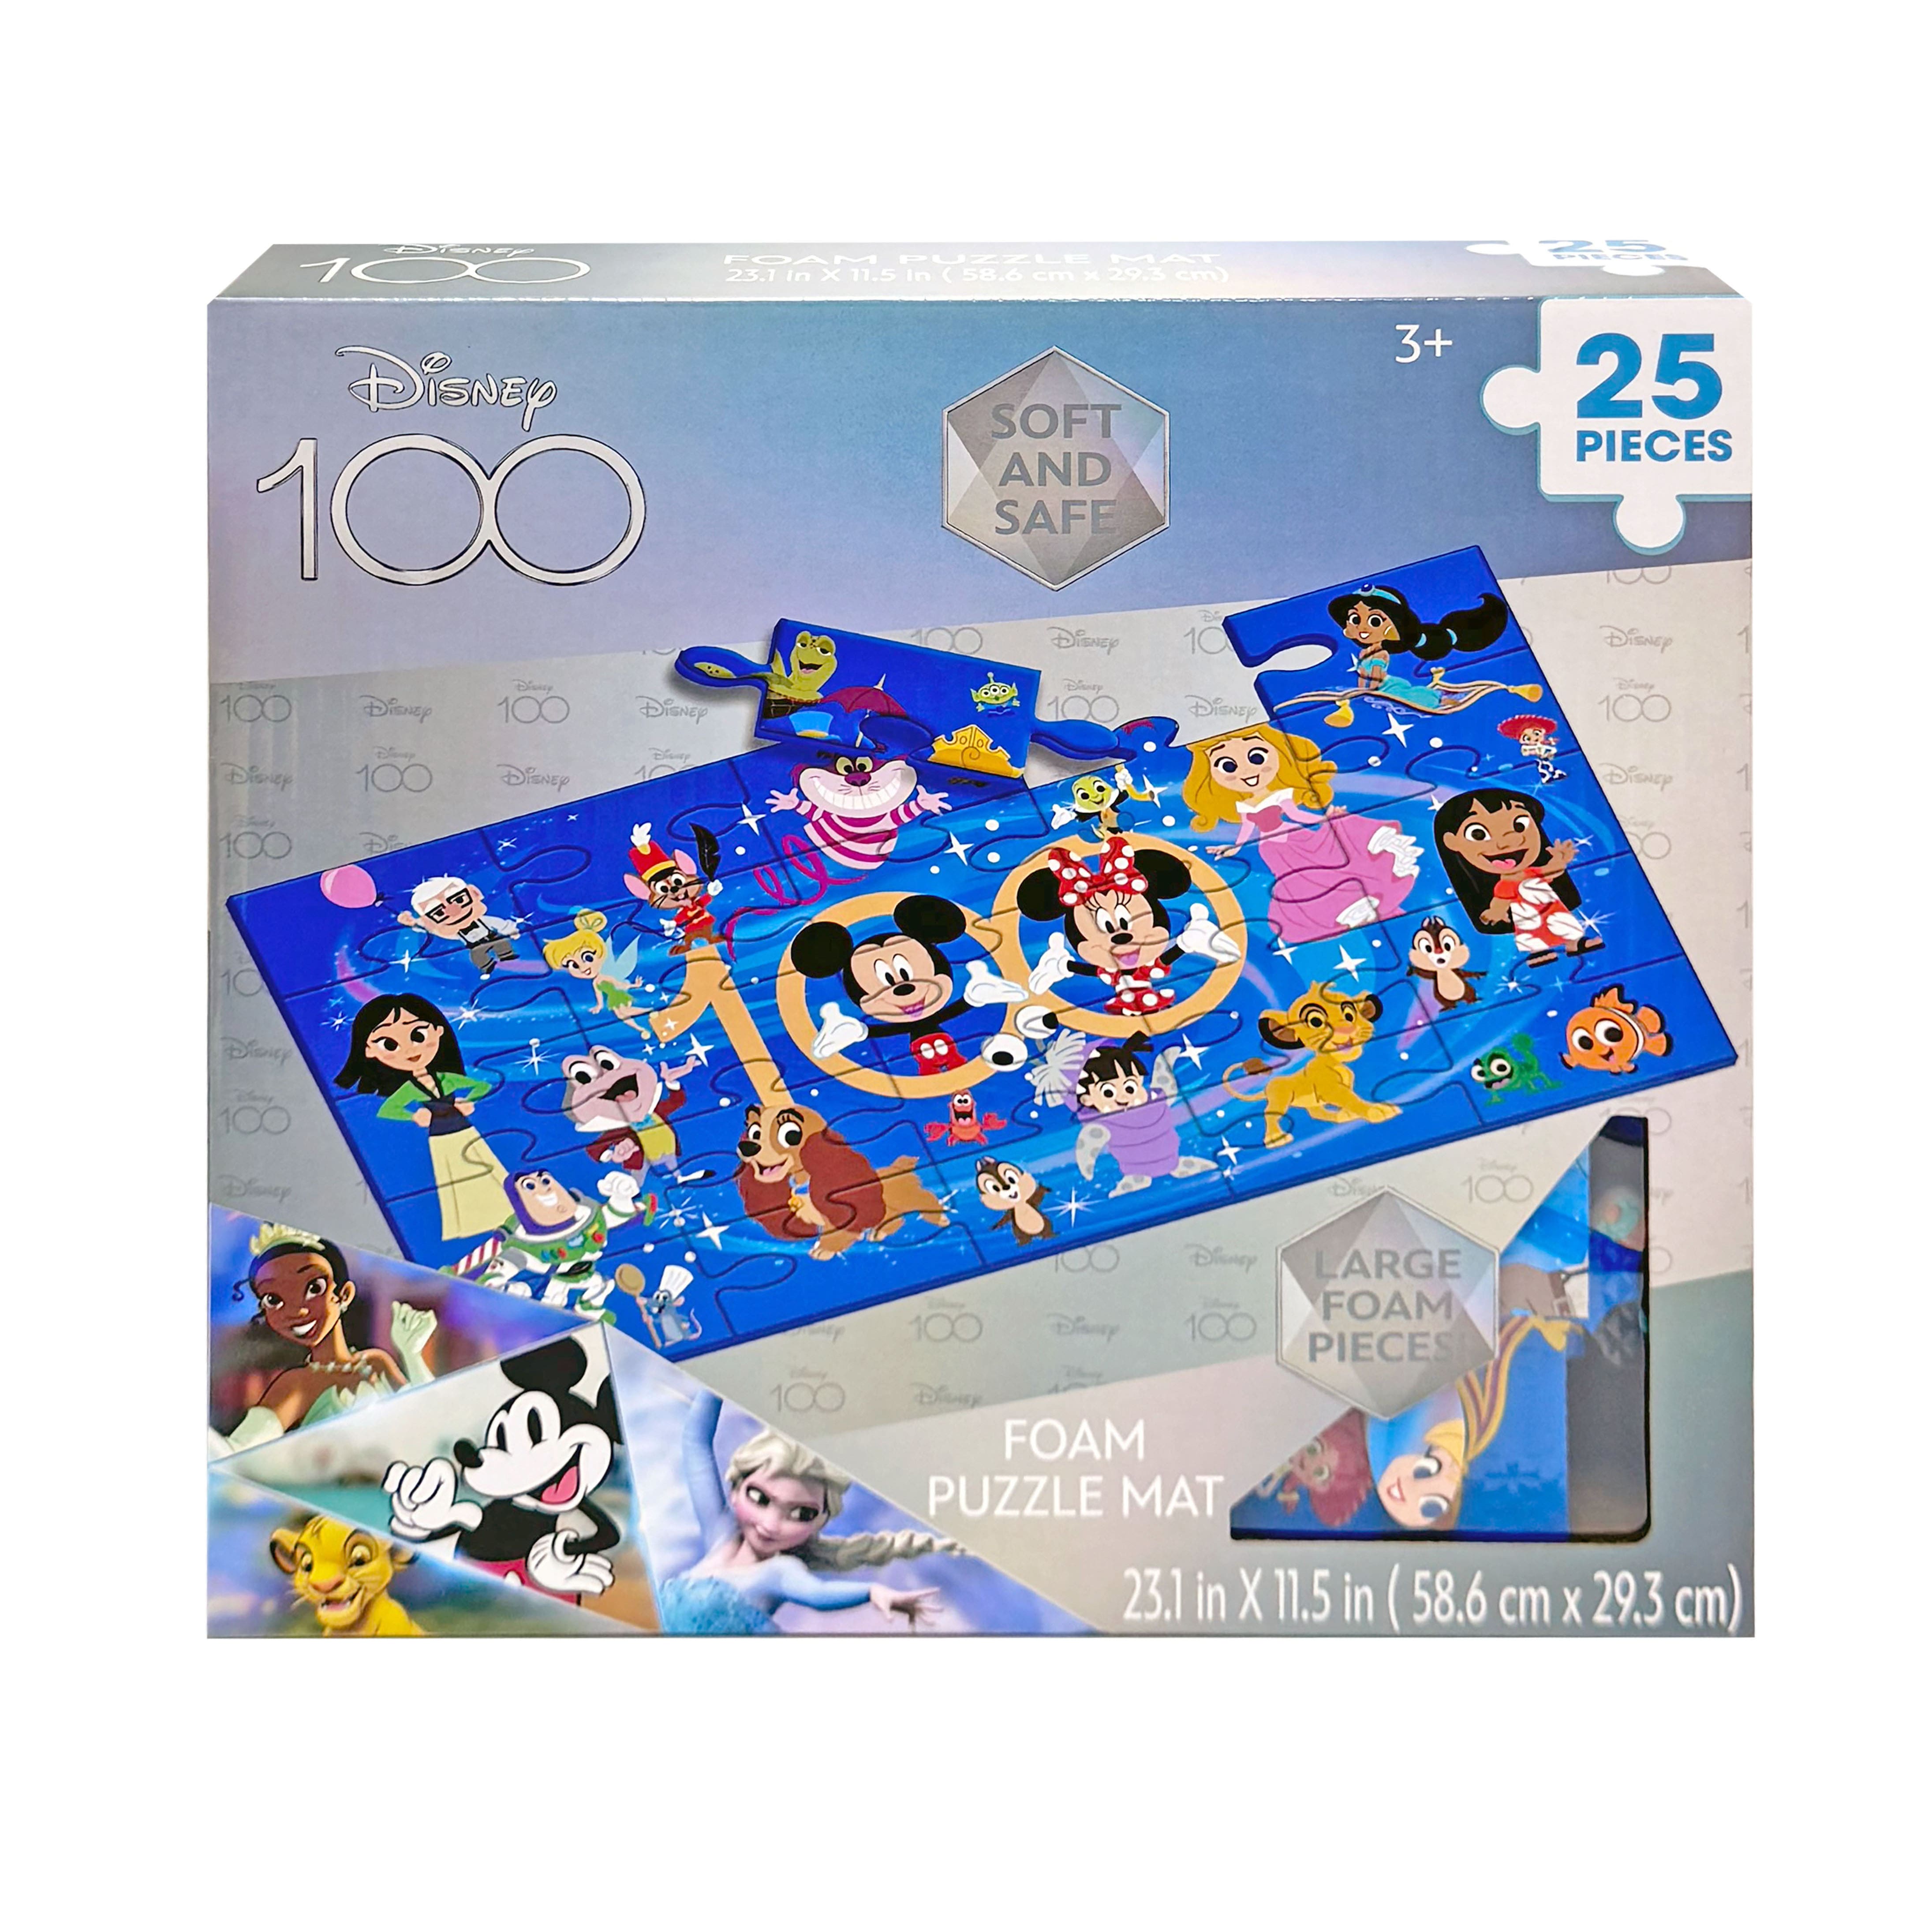 Disney® 100th Anniversary 25 Piece Foam Puzzle